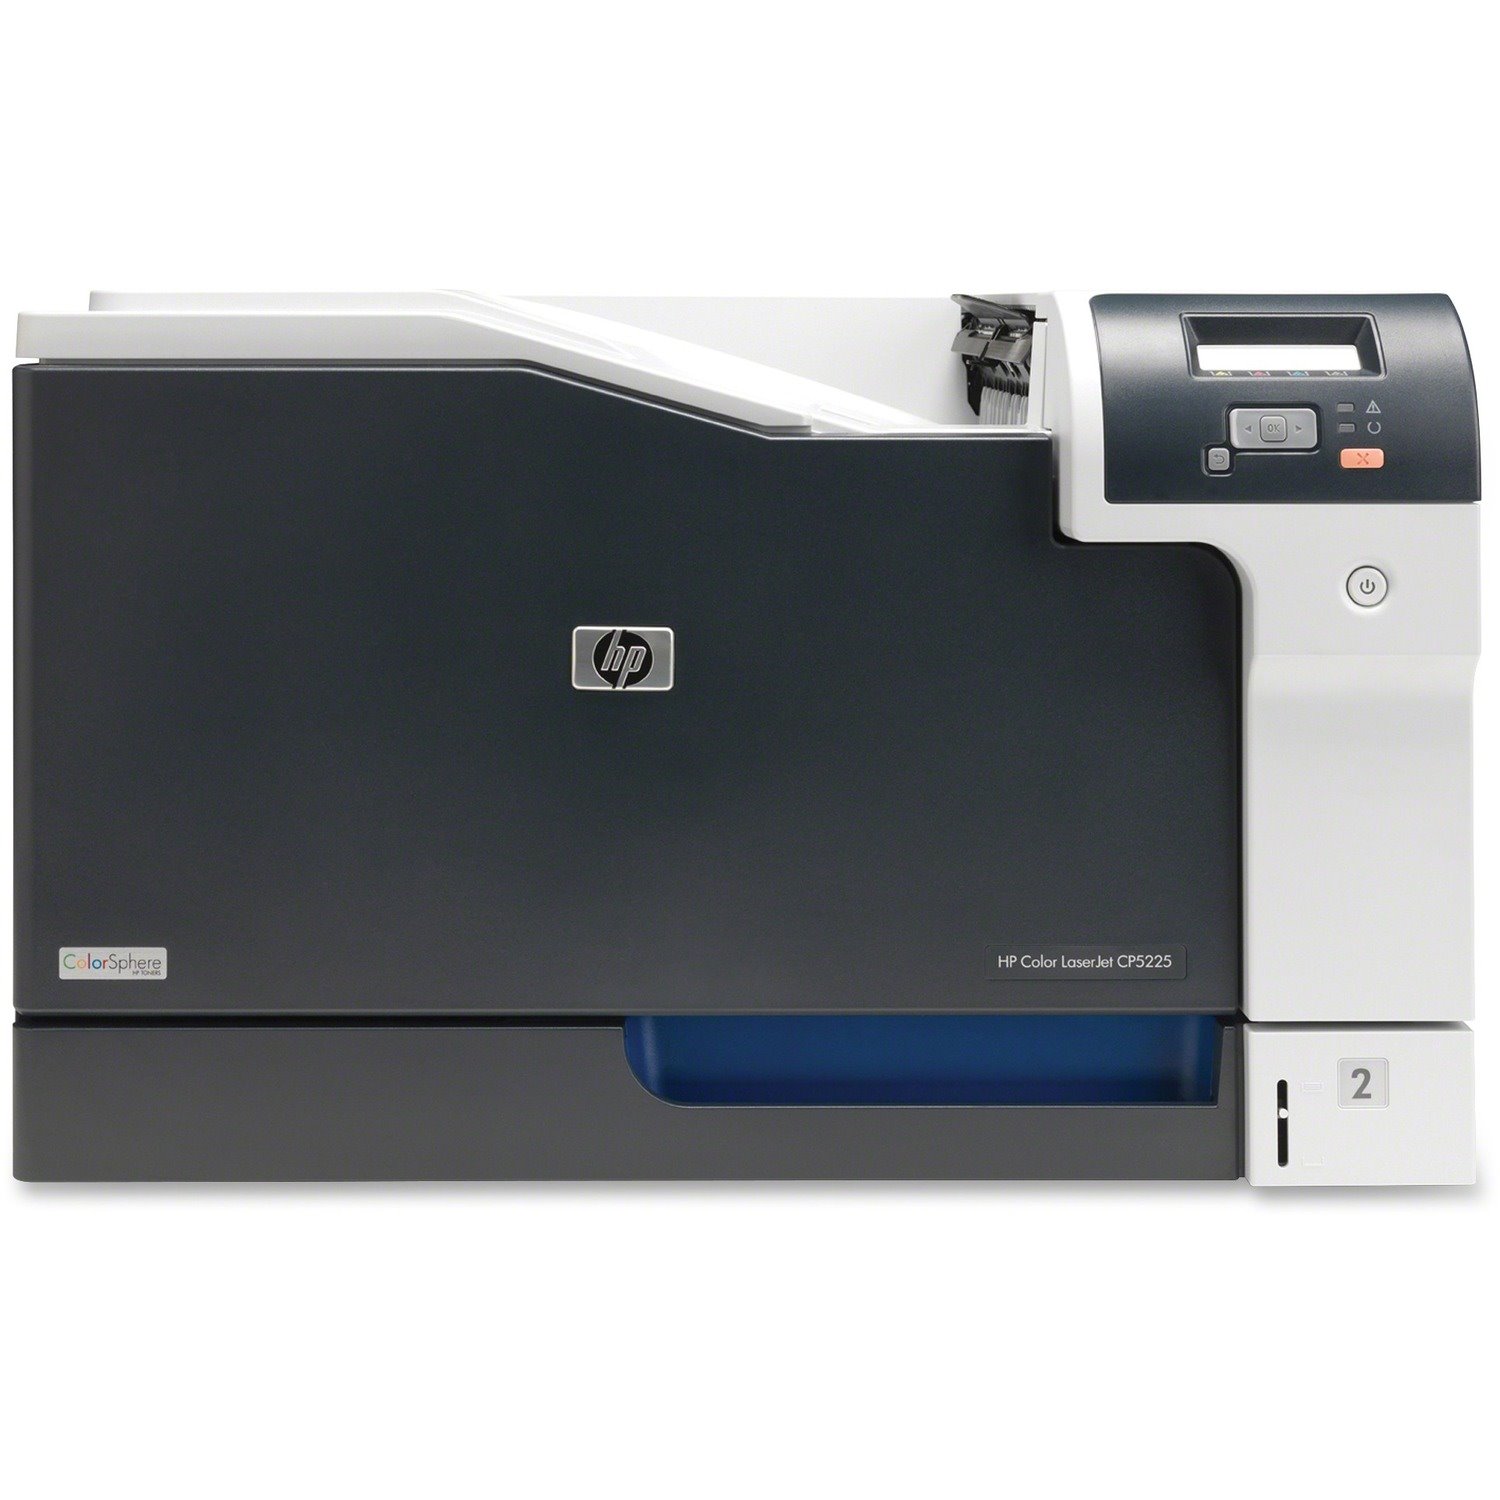 HP LaserJet CP5220 CP5225N Desktop Laser Printer - Colour